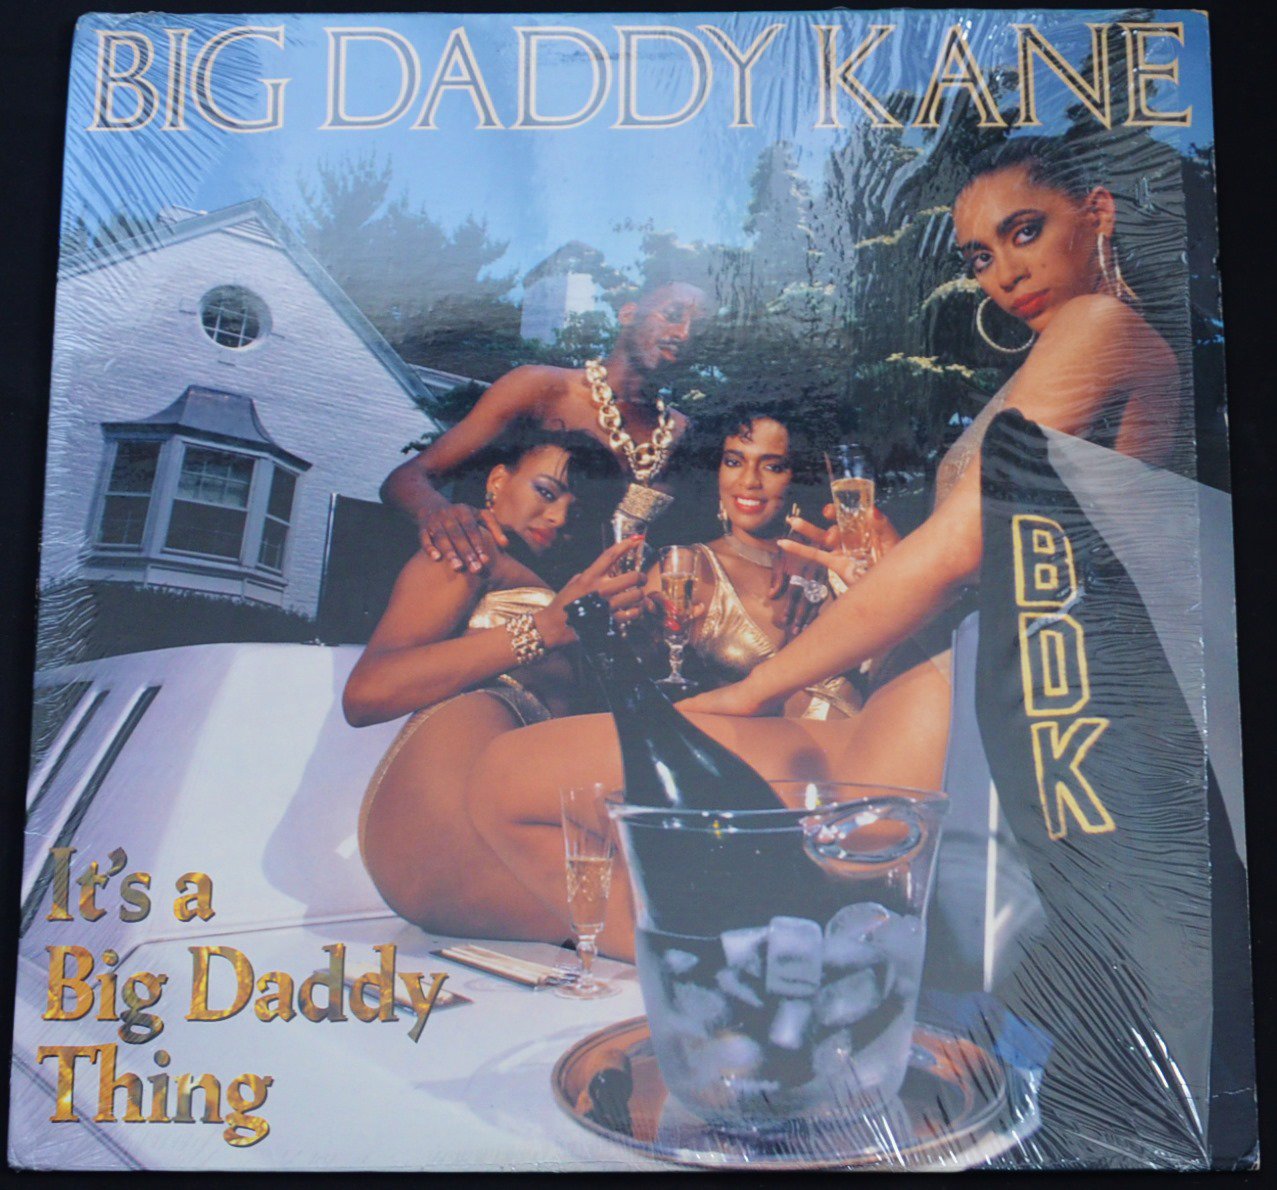 BIG DADDY KANE / IT'S A BIG DADDY THING (1LP)